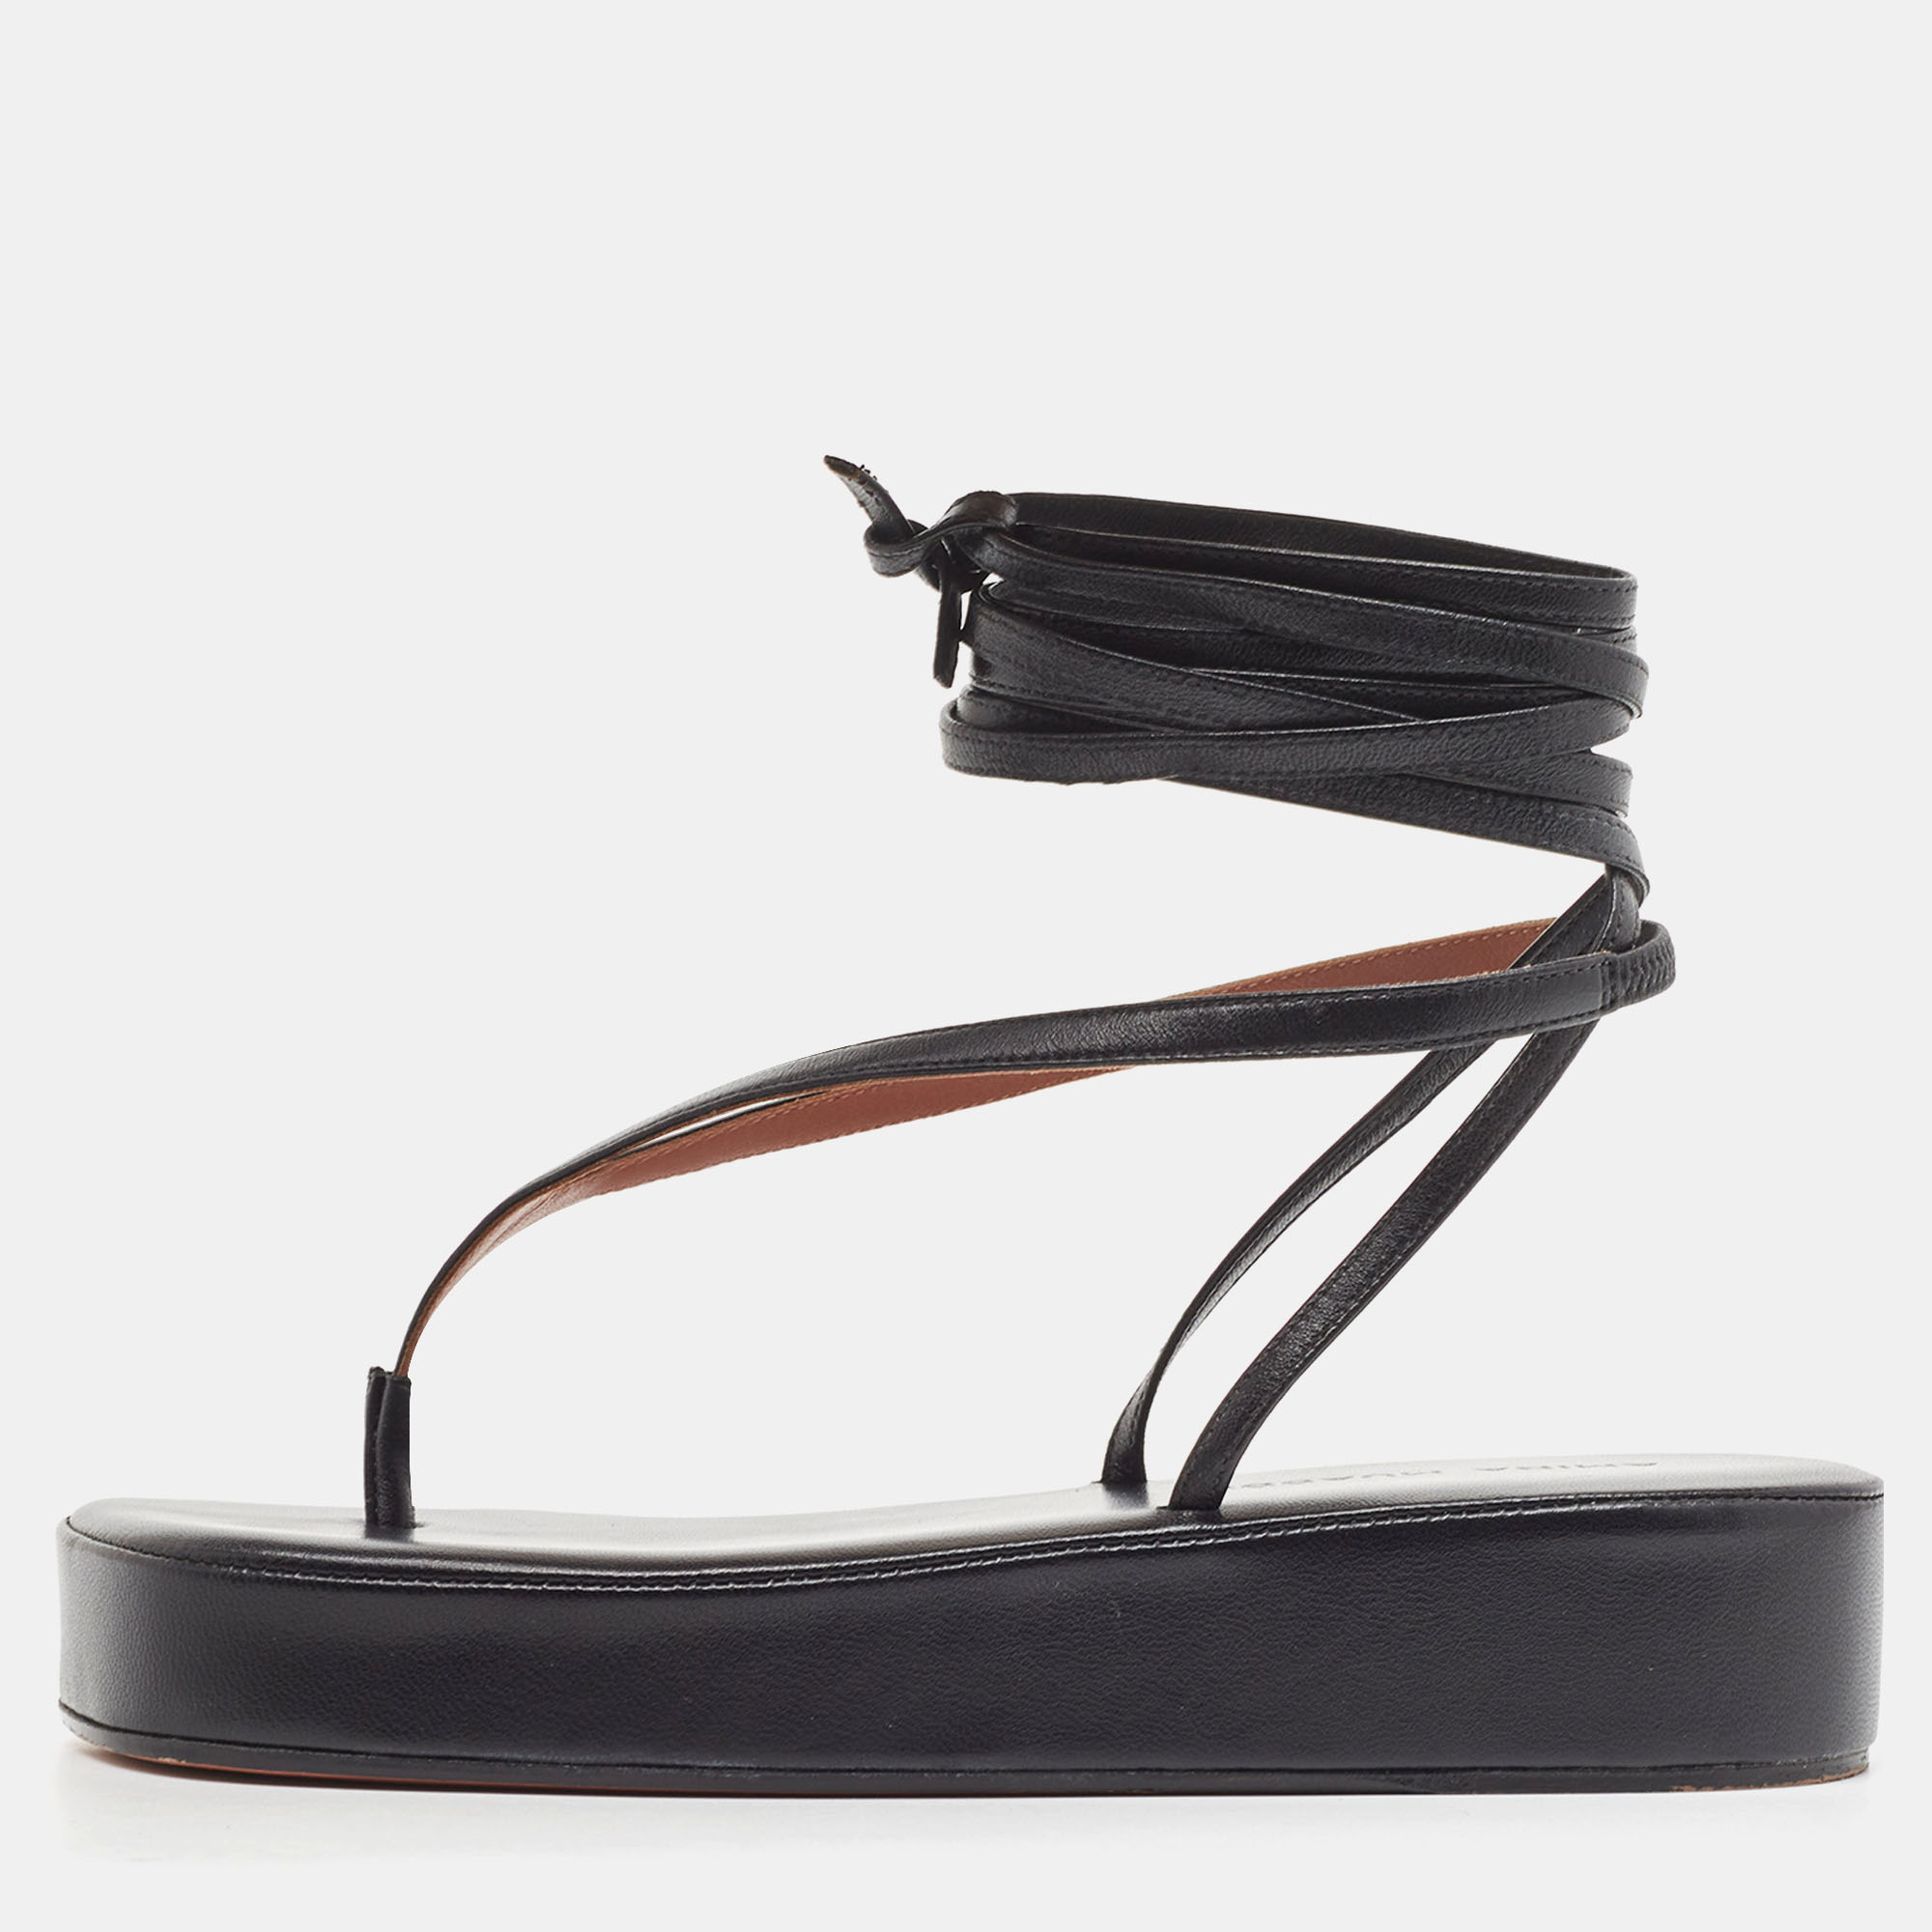 Amina muaddi black leather jamie platform ankle wrap sandals size 37